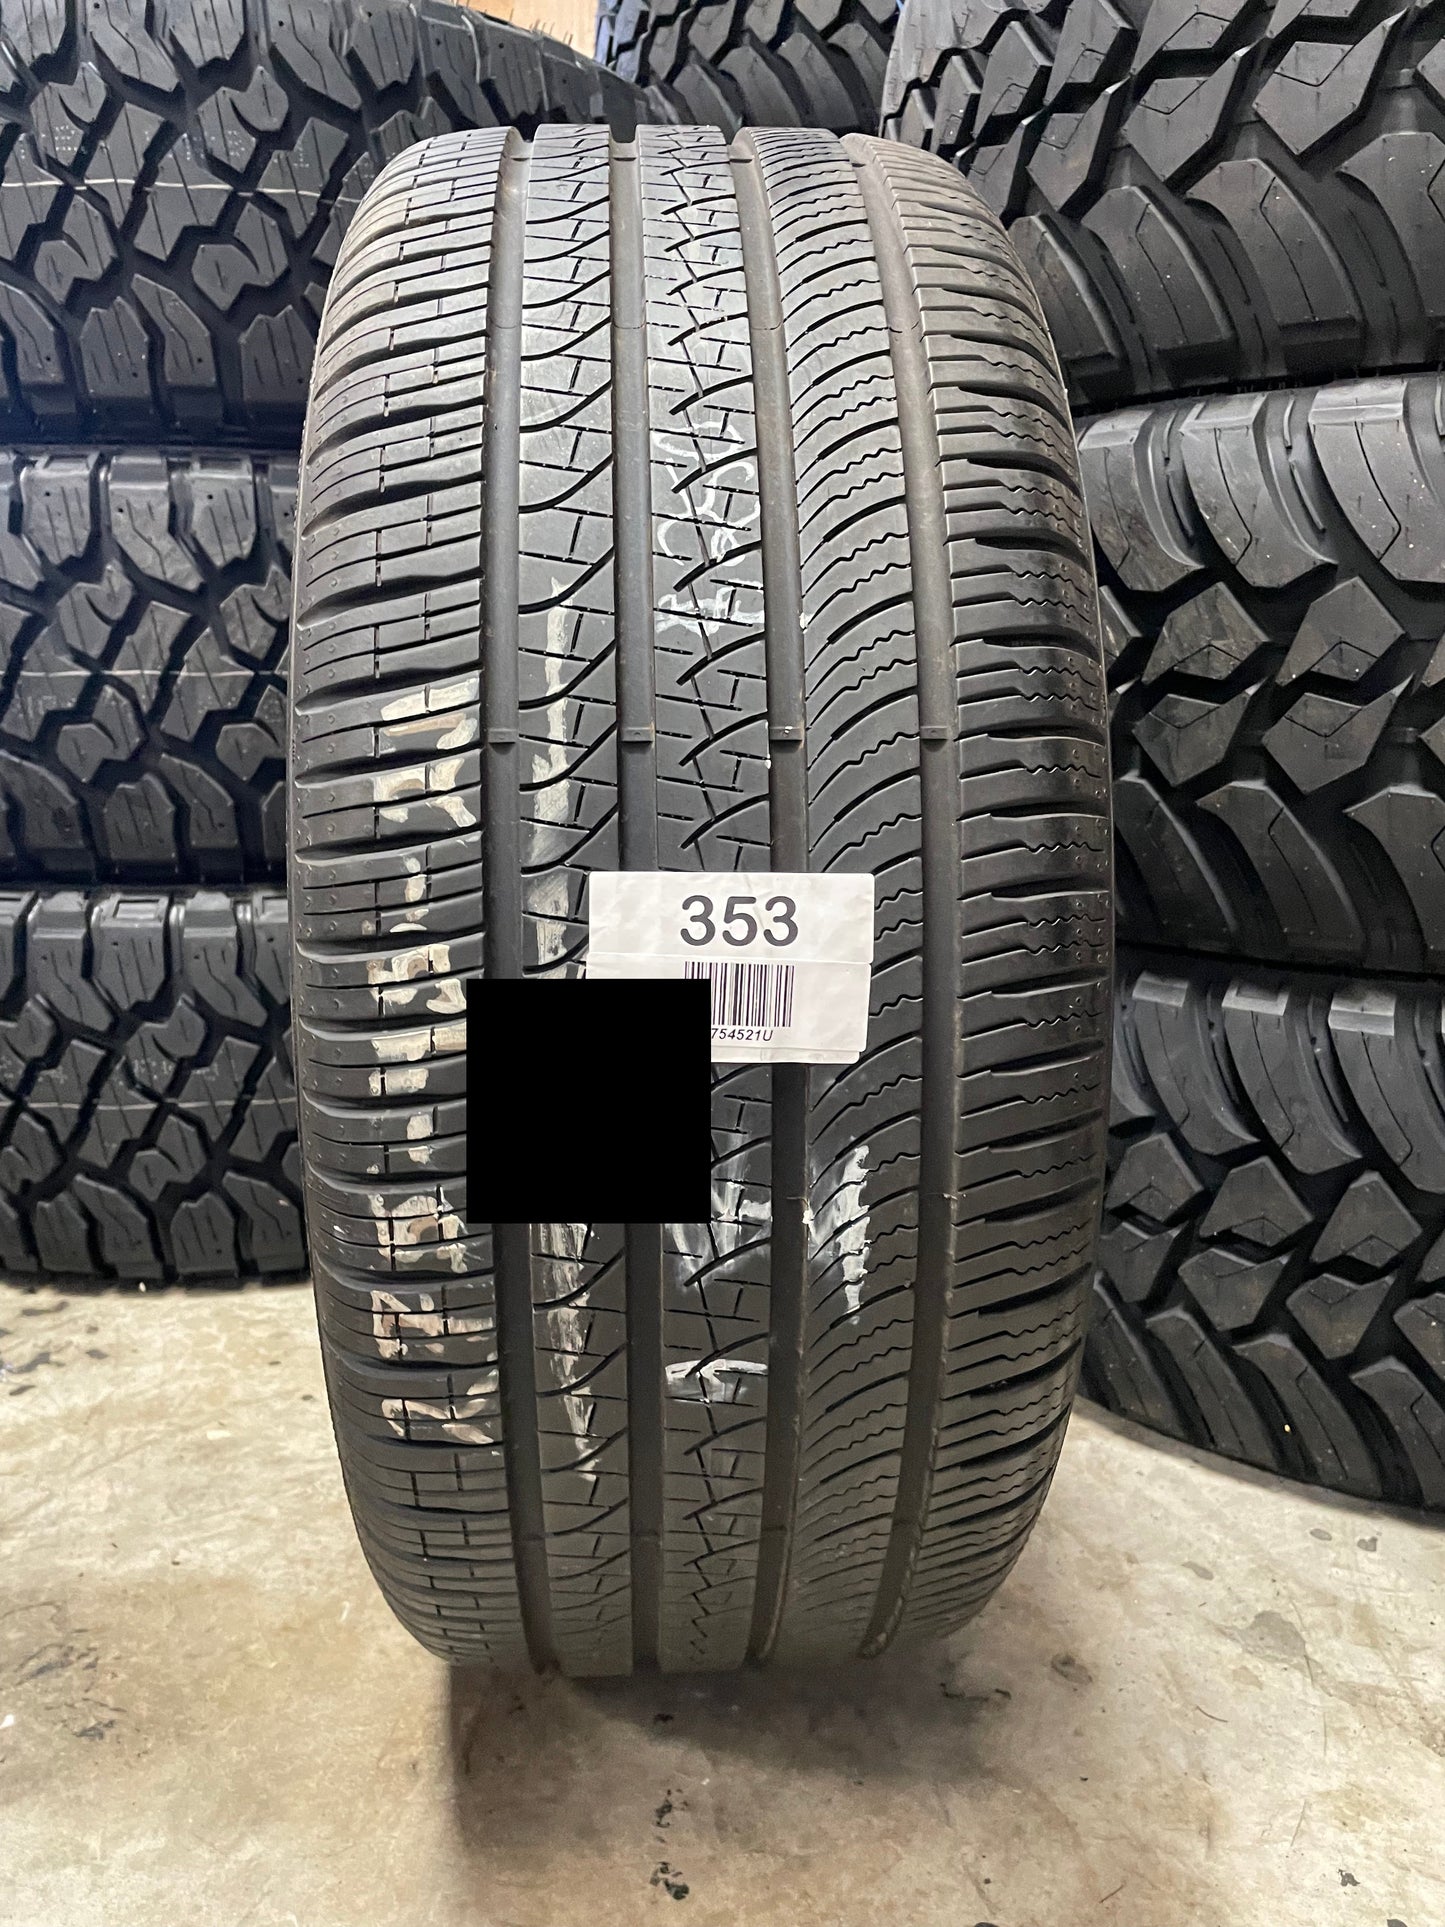 SINGLE 275/45R21 Pirelli Scorpion Zero 110 W XL - Used Tires